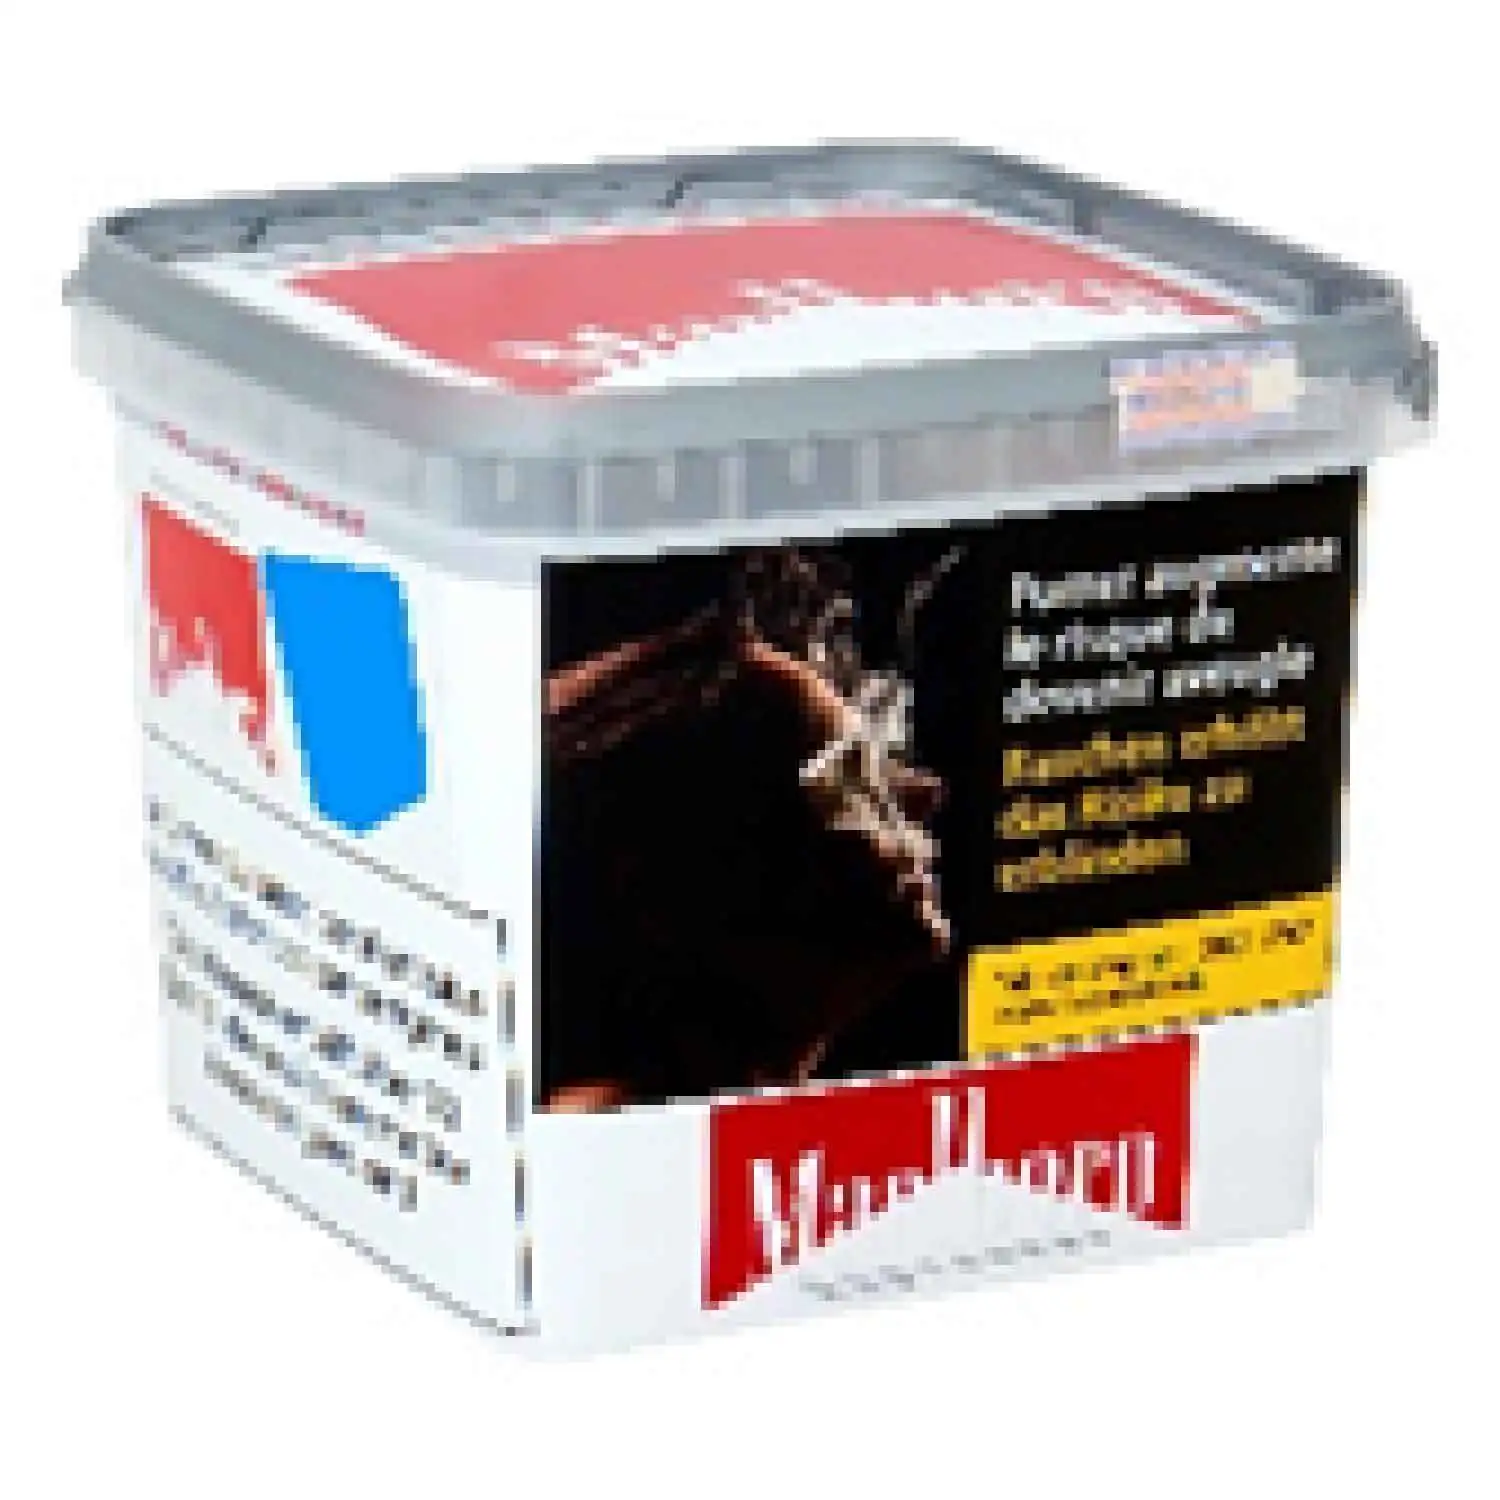 Marlboro volume 500g (XXXL) - Buy at Real Tobacco